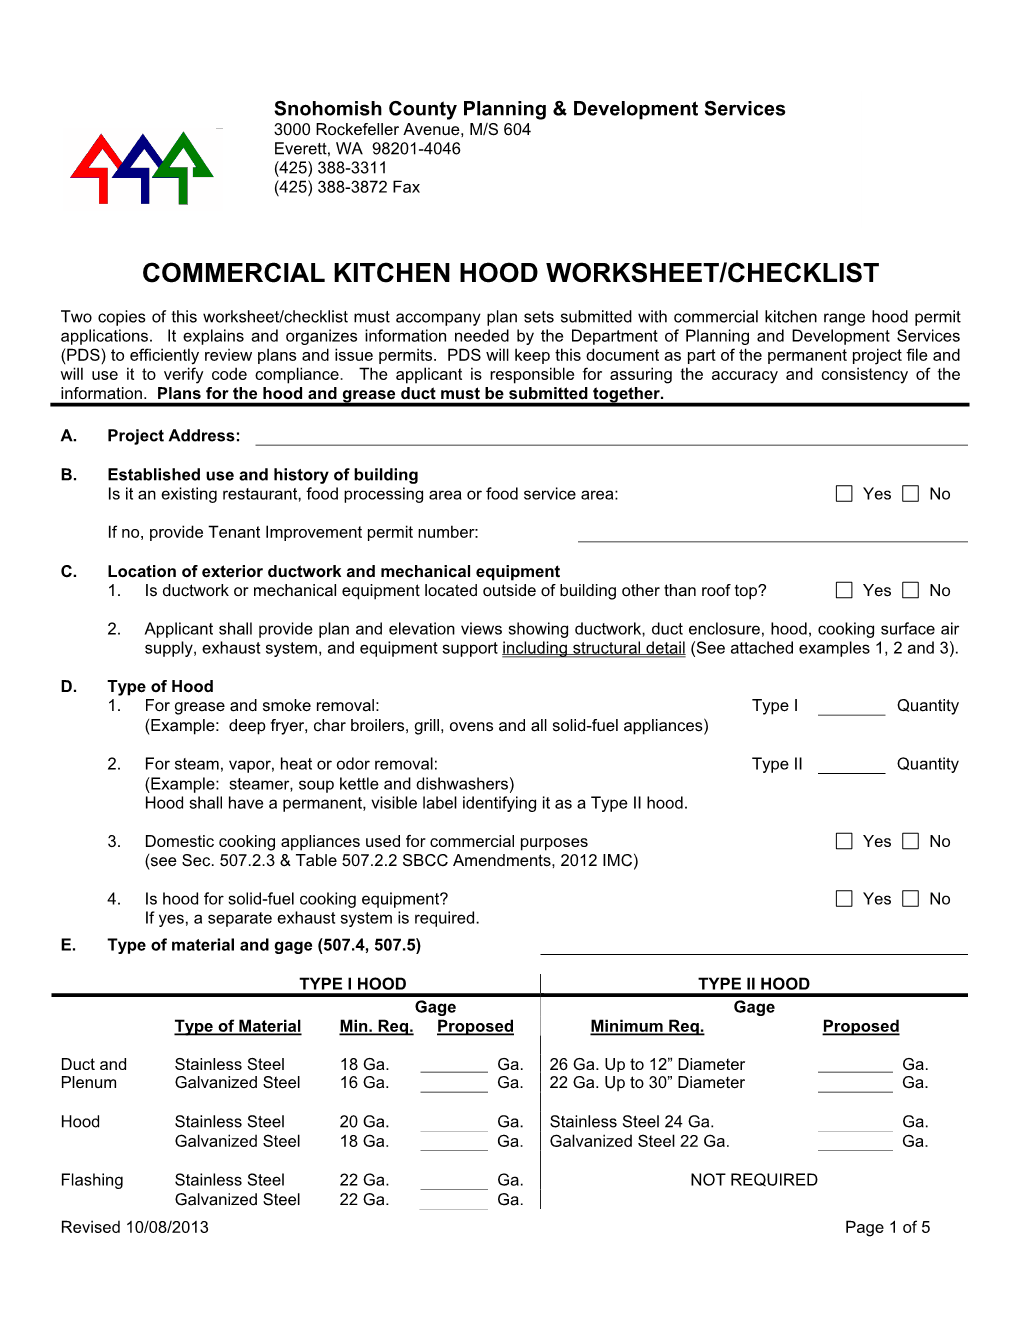 Commercial Kitchen Hood Worksheet/Checklist